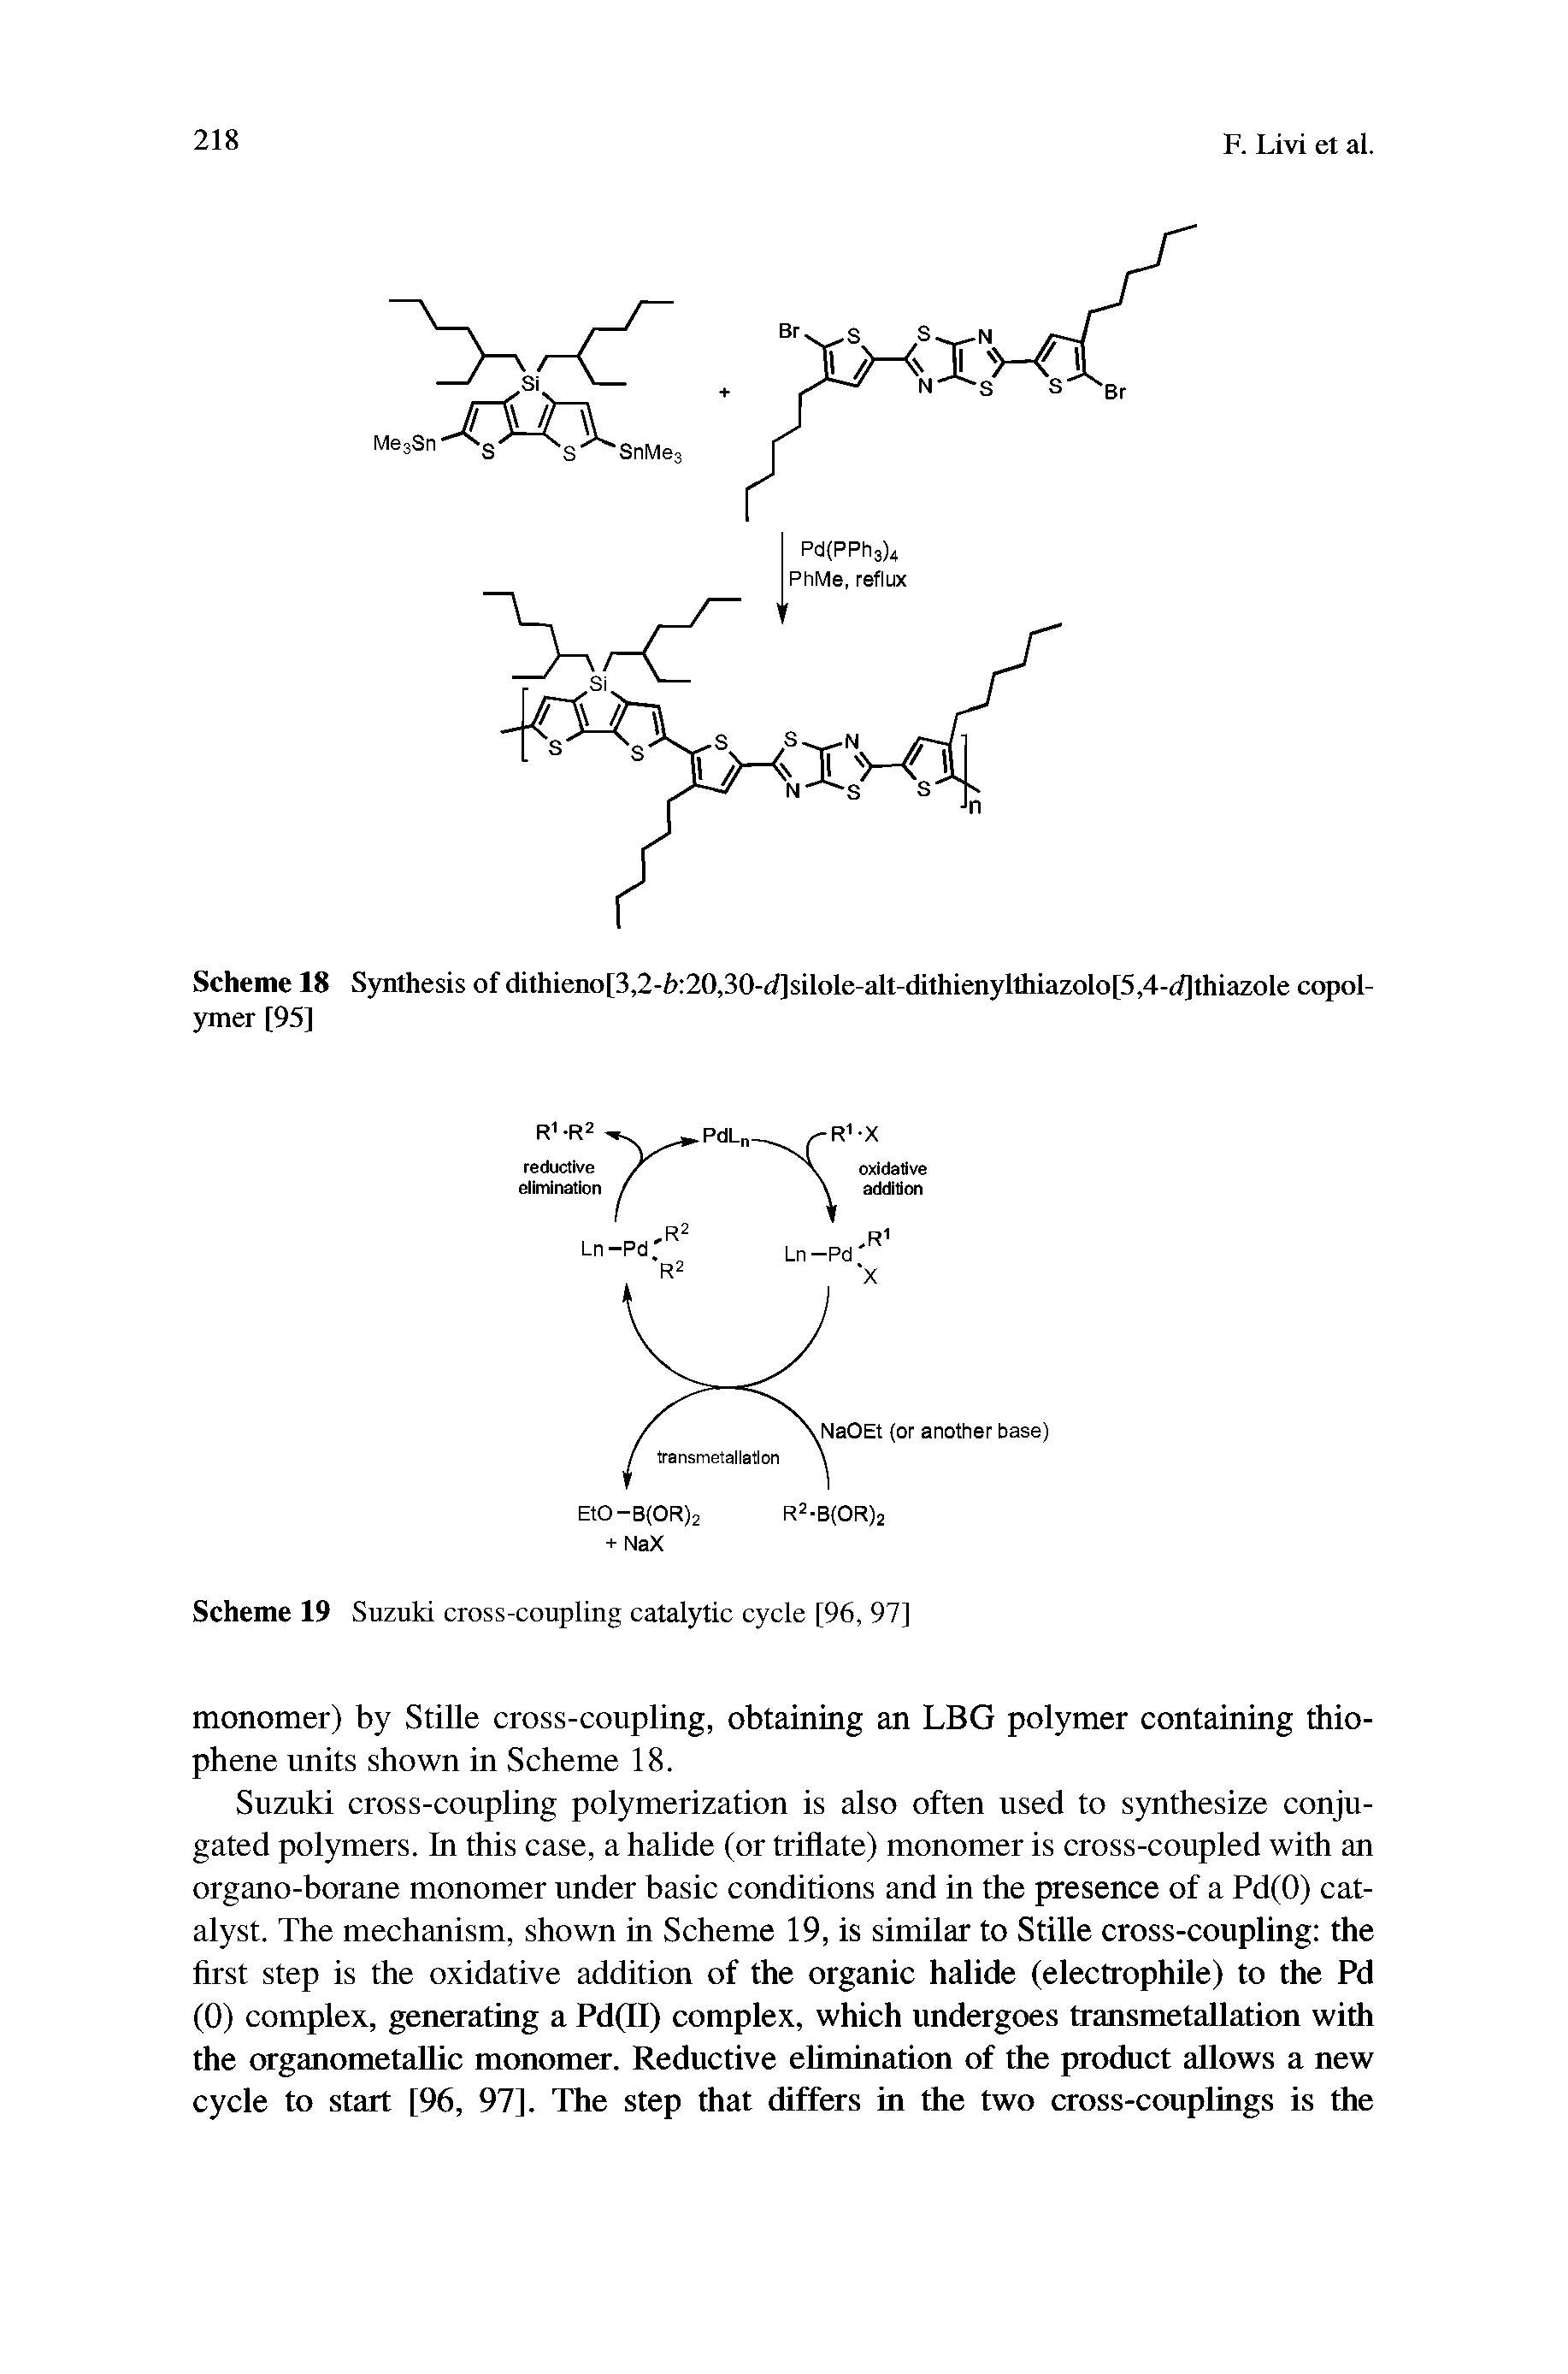 Scheme 19 Suzuki cross-coupling catalytic cycle [96, 97]...